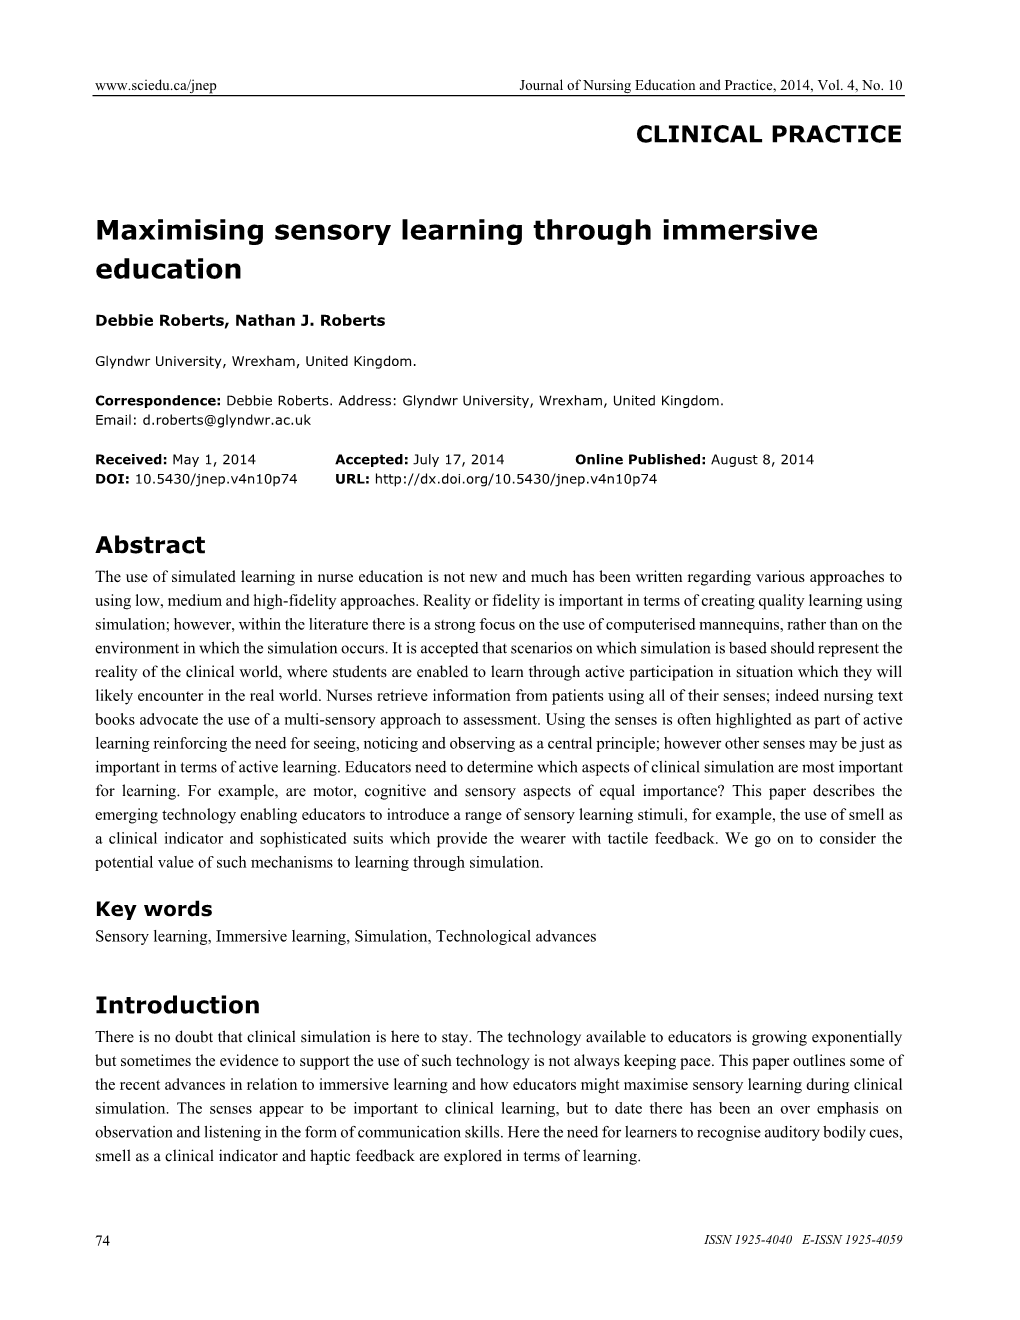 Maximising Sensory Learning Through Immersive Education